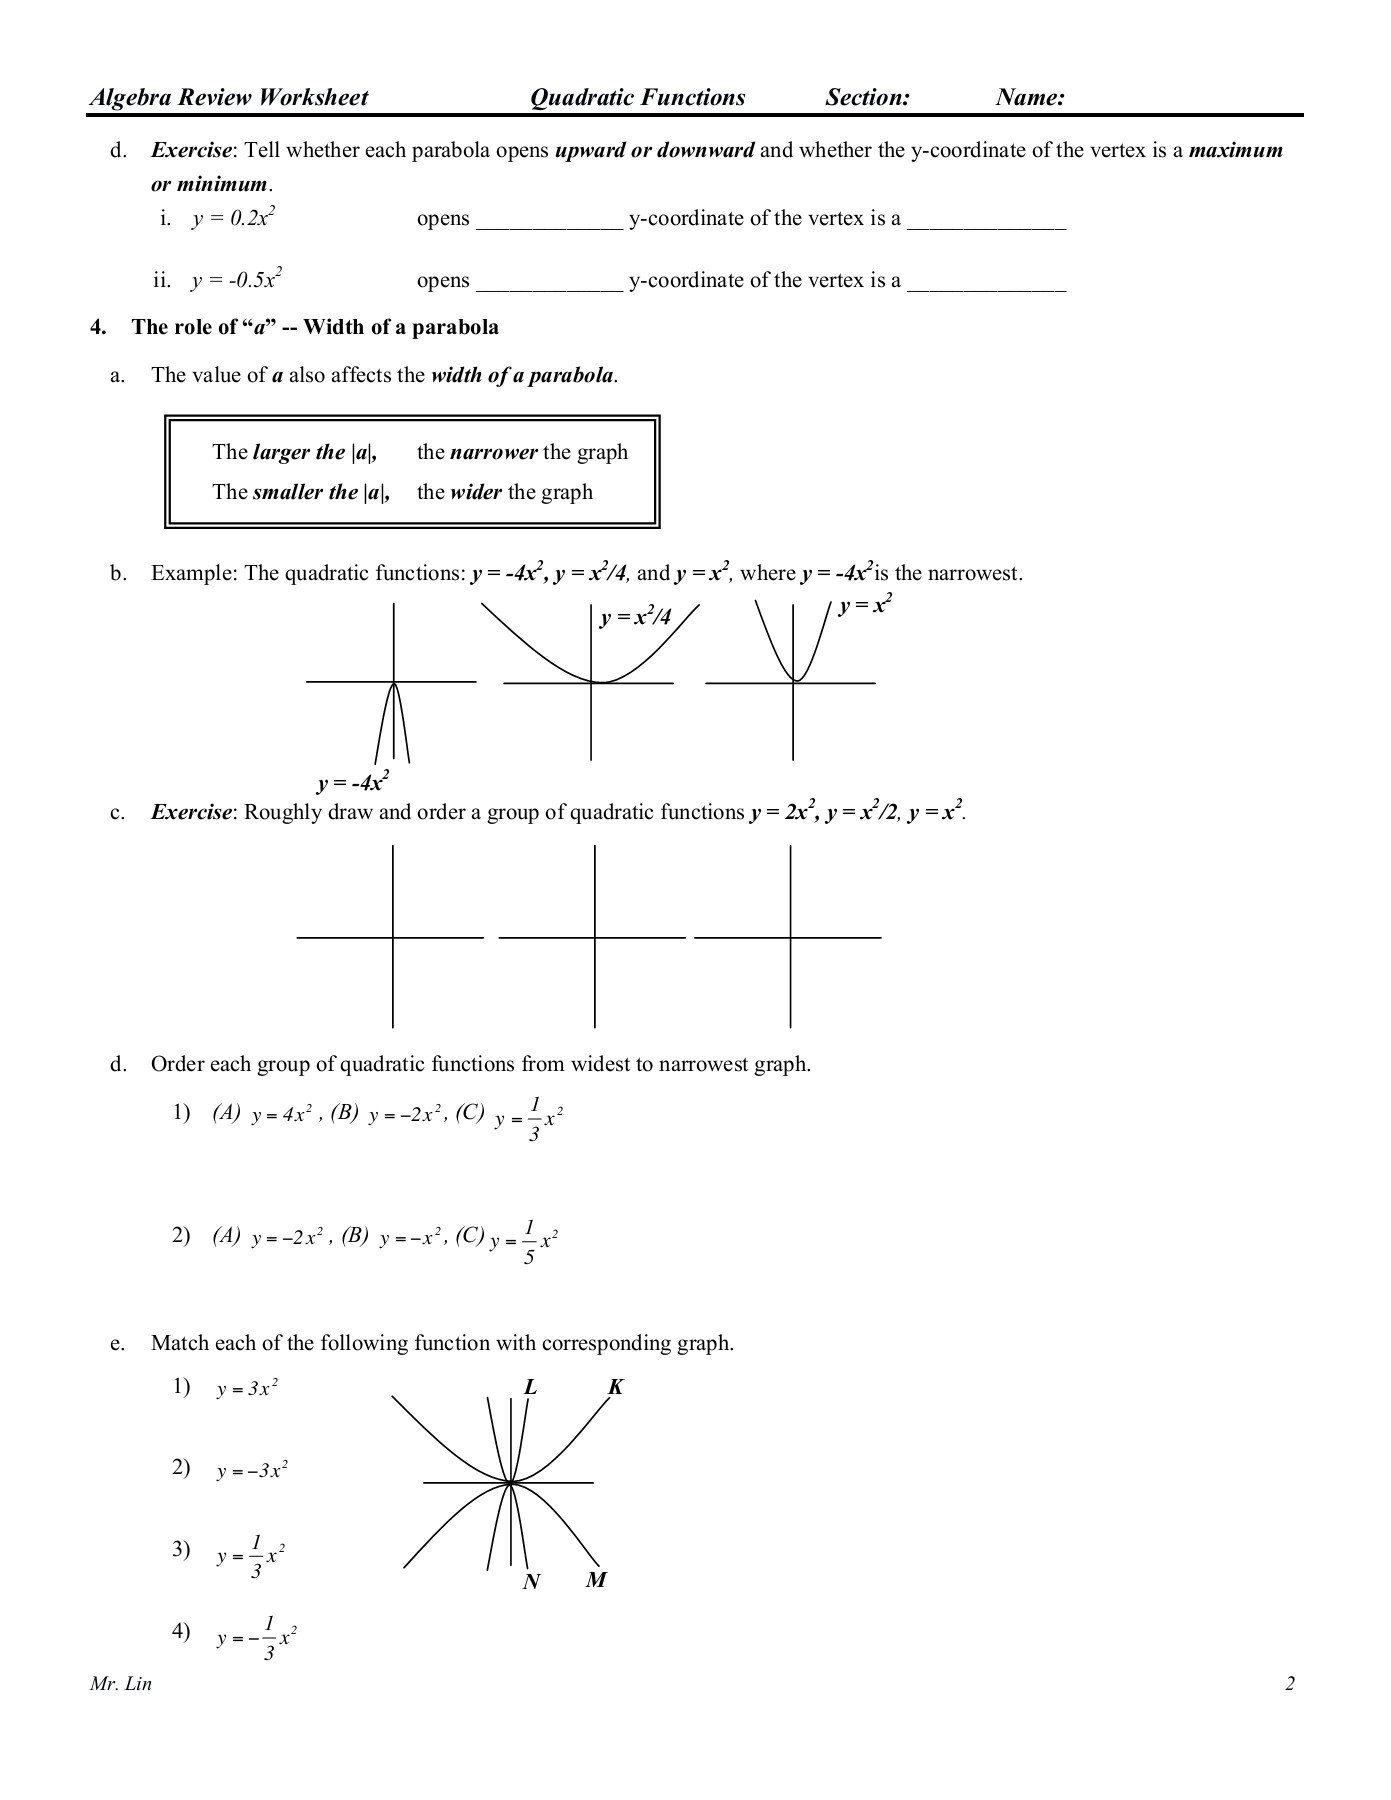 Graphing Quadratic Functions Worksheet Algebra Worksheet 09 Qudratic Functions Pages 1 5 Text